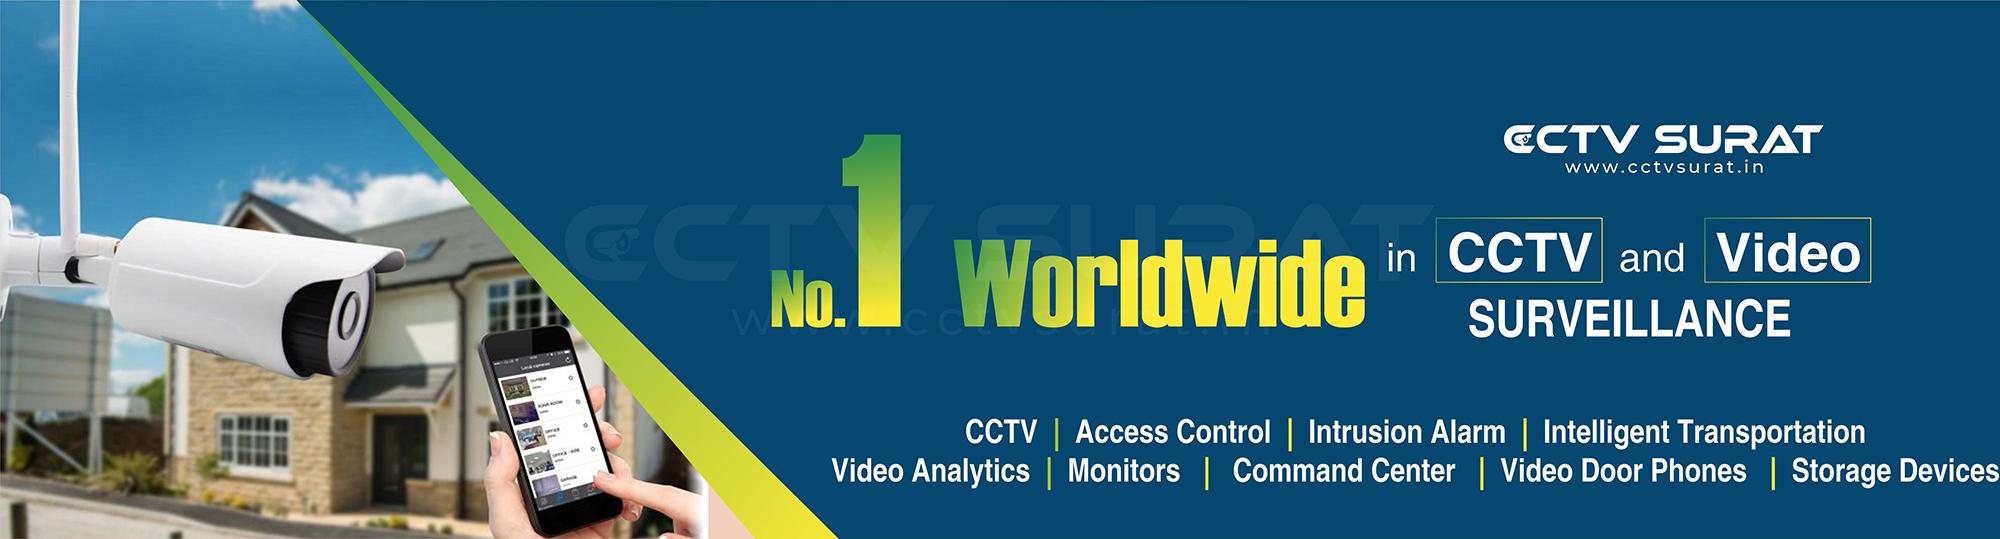 cctv security systems distributors